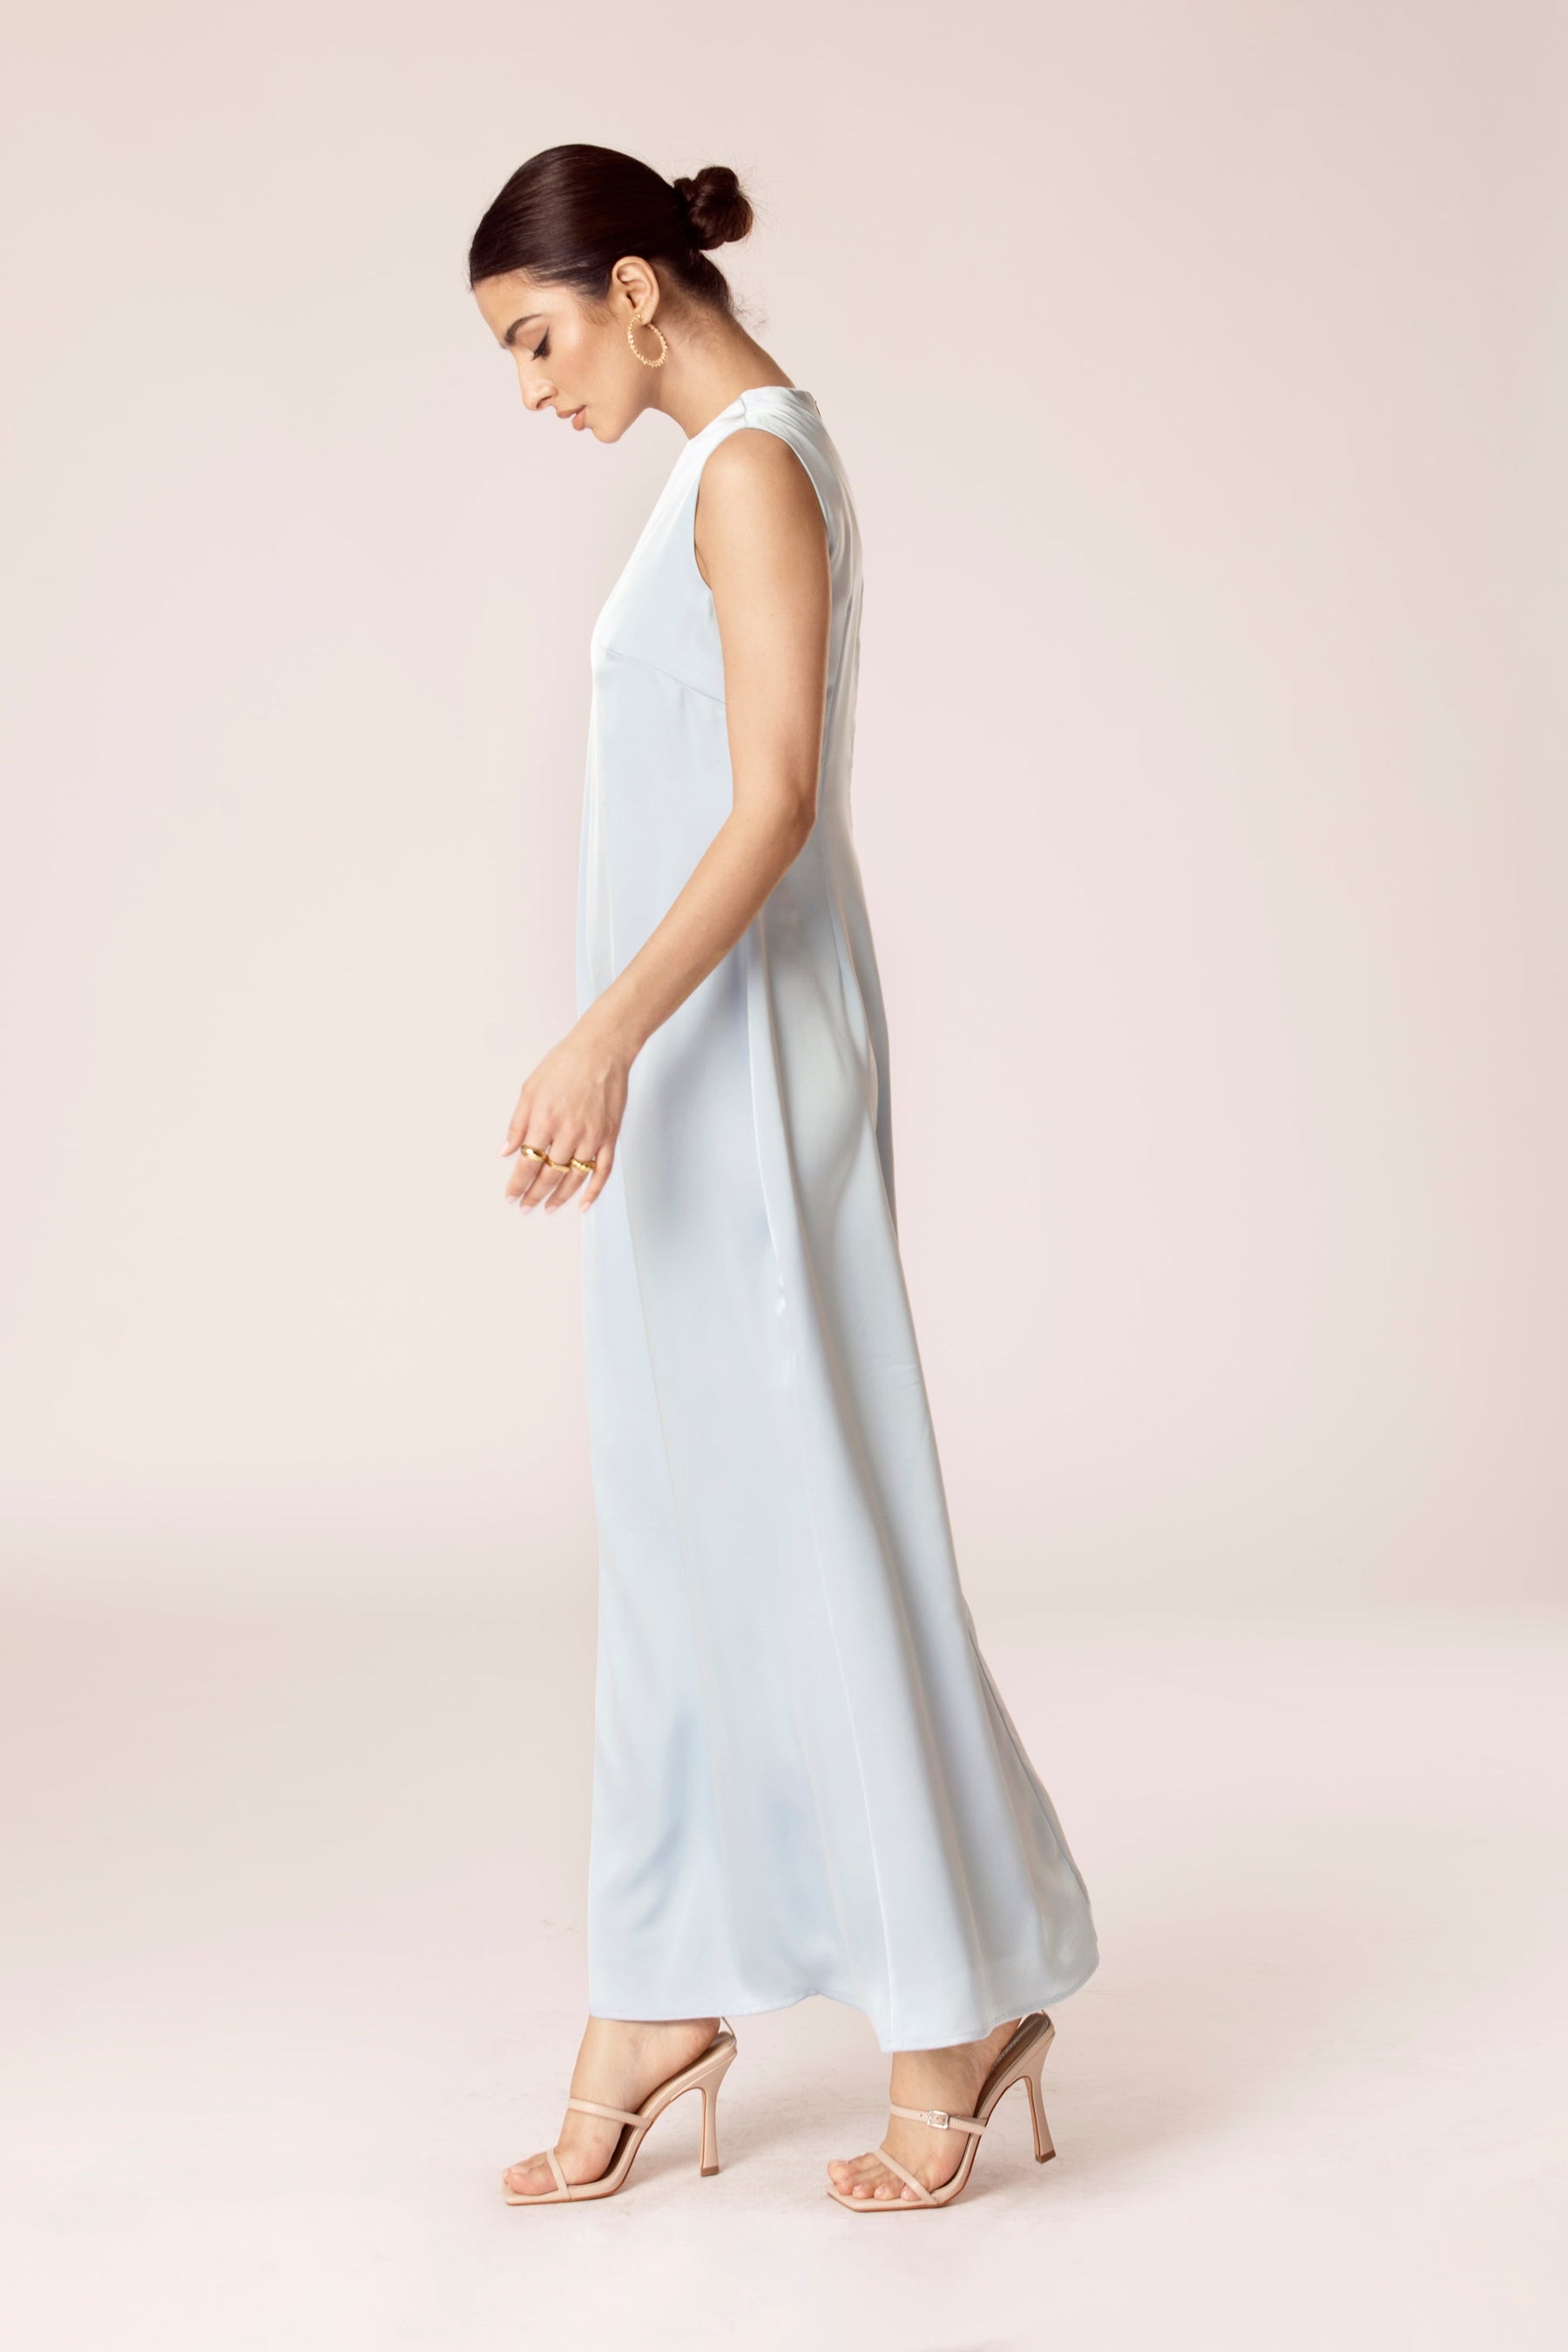 Powder Blue Satin Sleeveless Maxi Dress Veiled Collection 